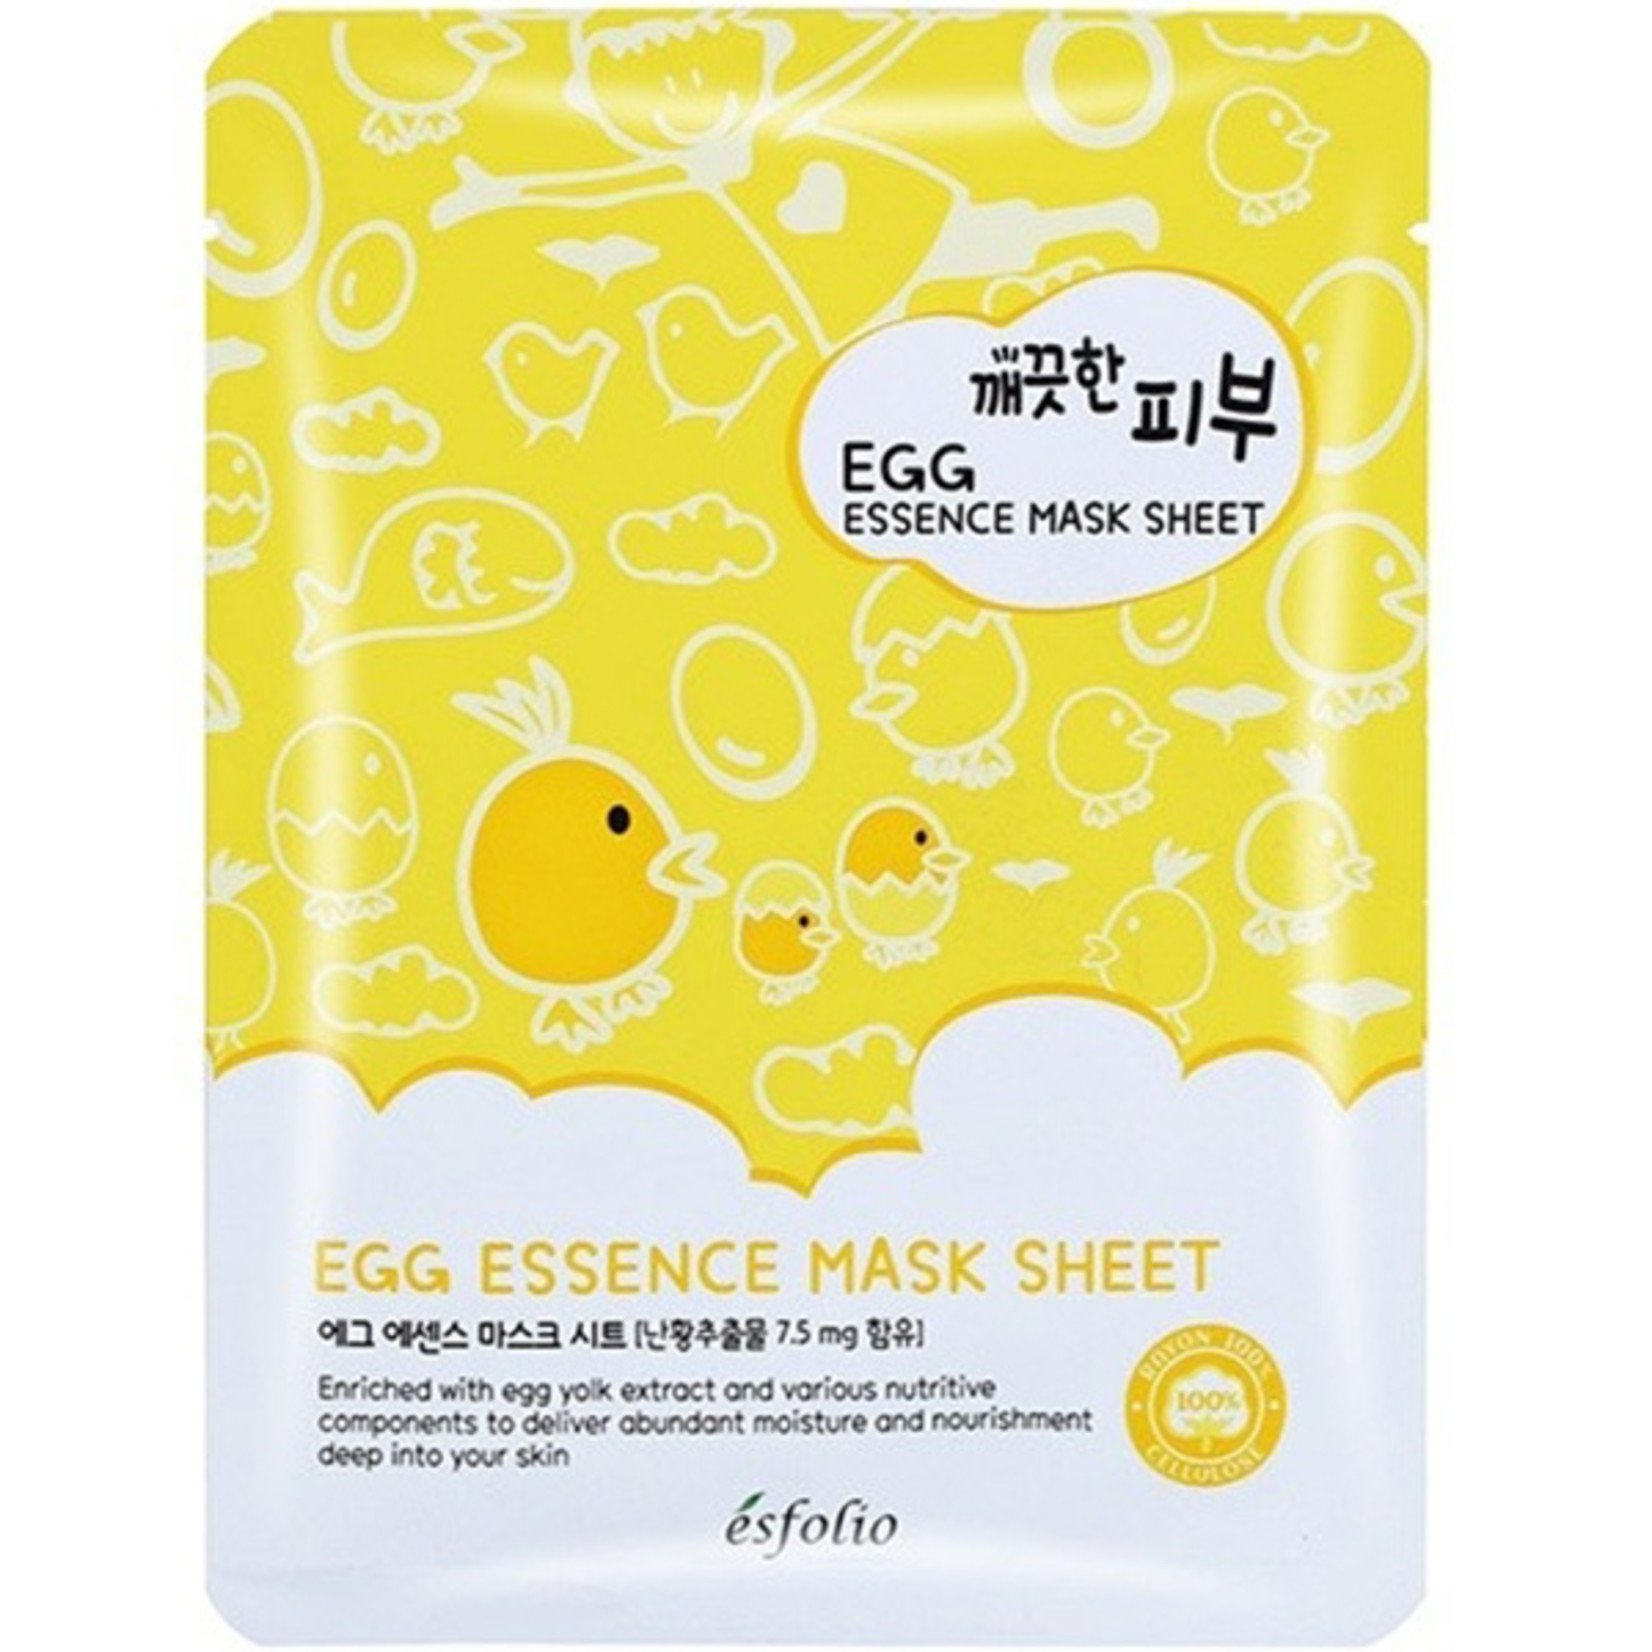 esfolio Pure Skin Egg Essence Mask Sheet